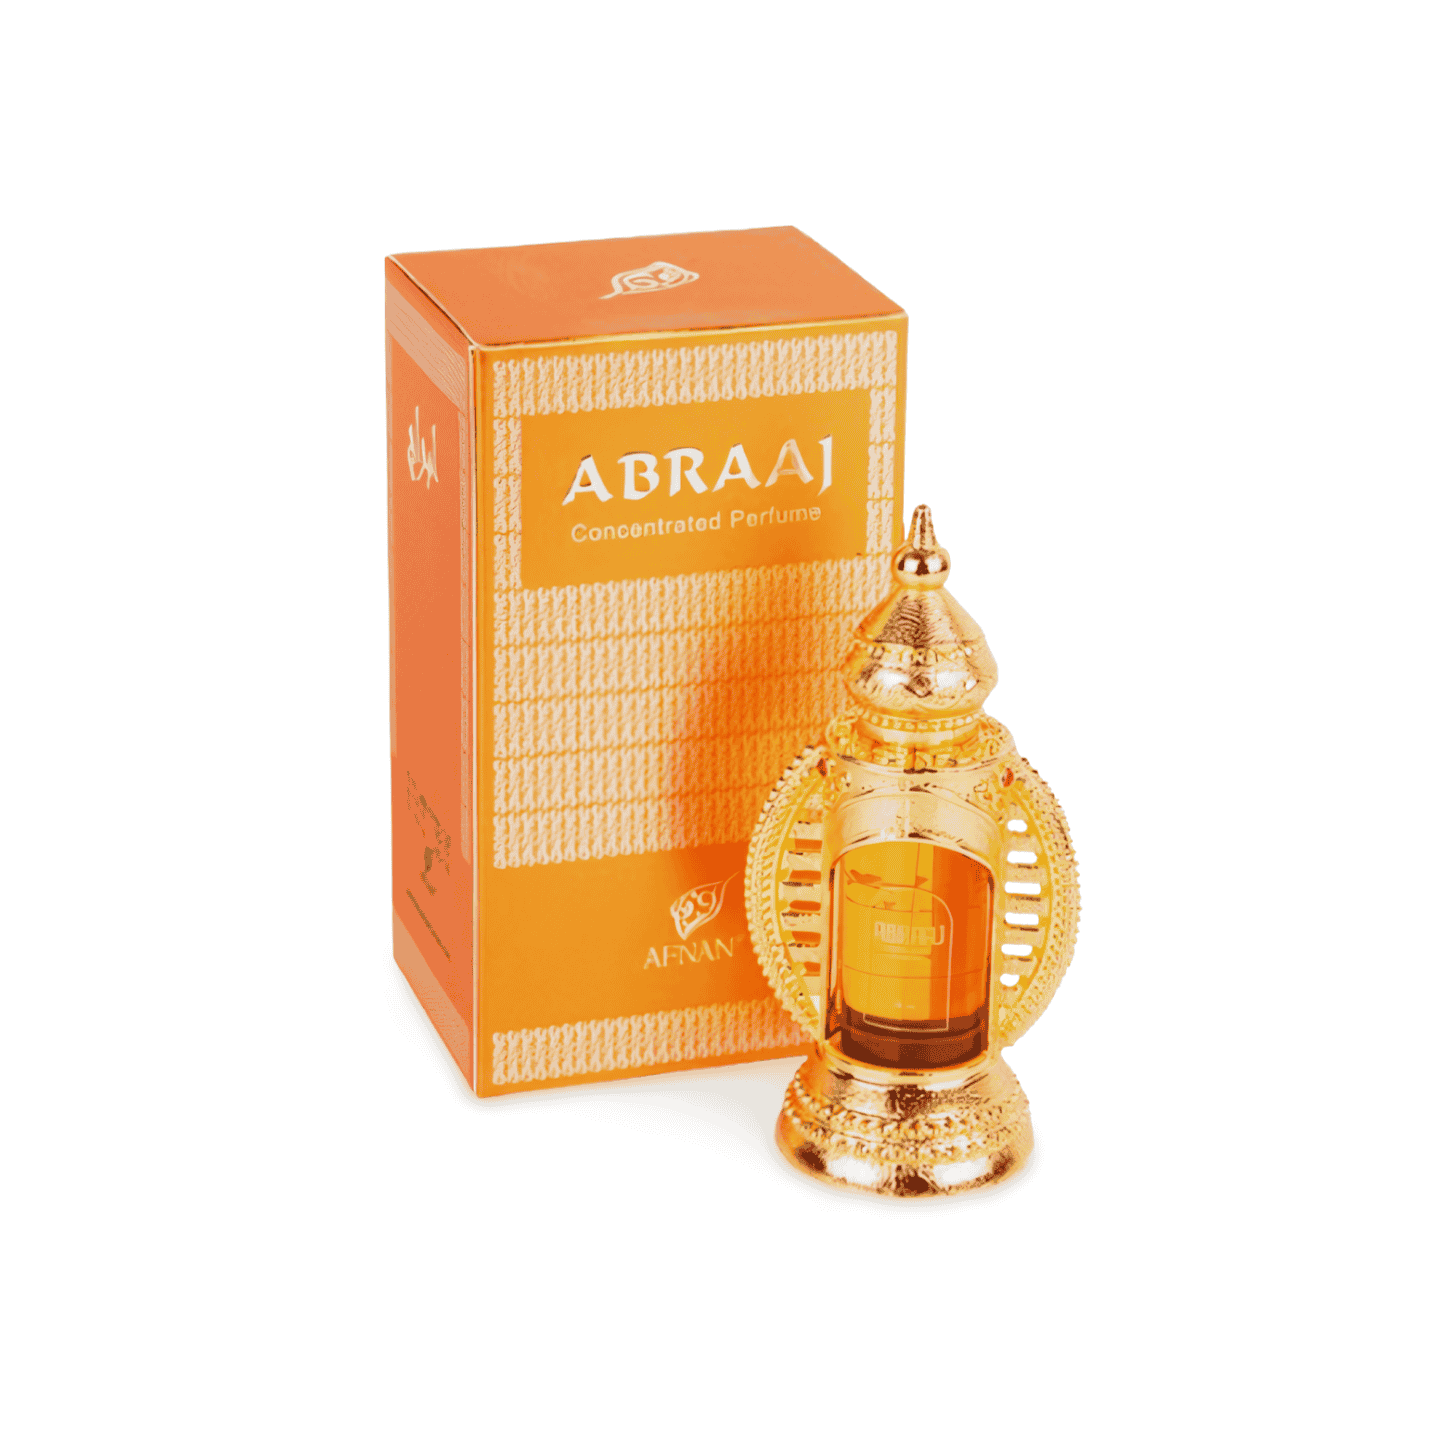 Abraaj Afnan Concentrated Perfume